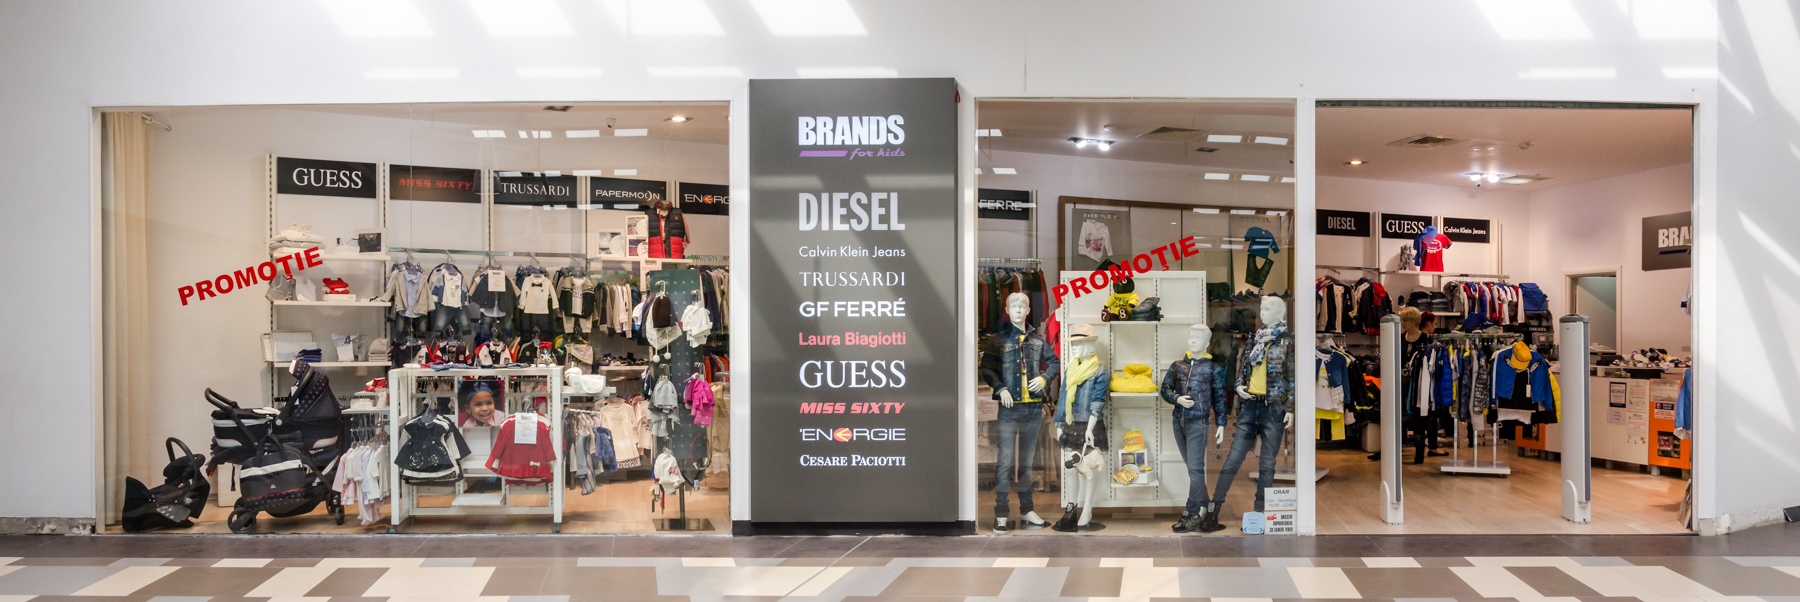 Brands for Kids: haine & de firma copii – Mall